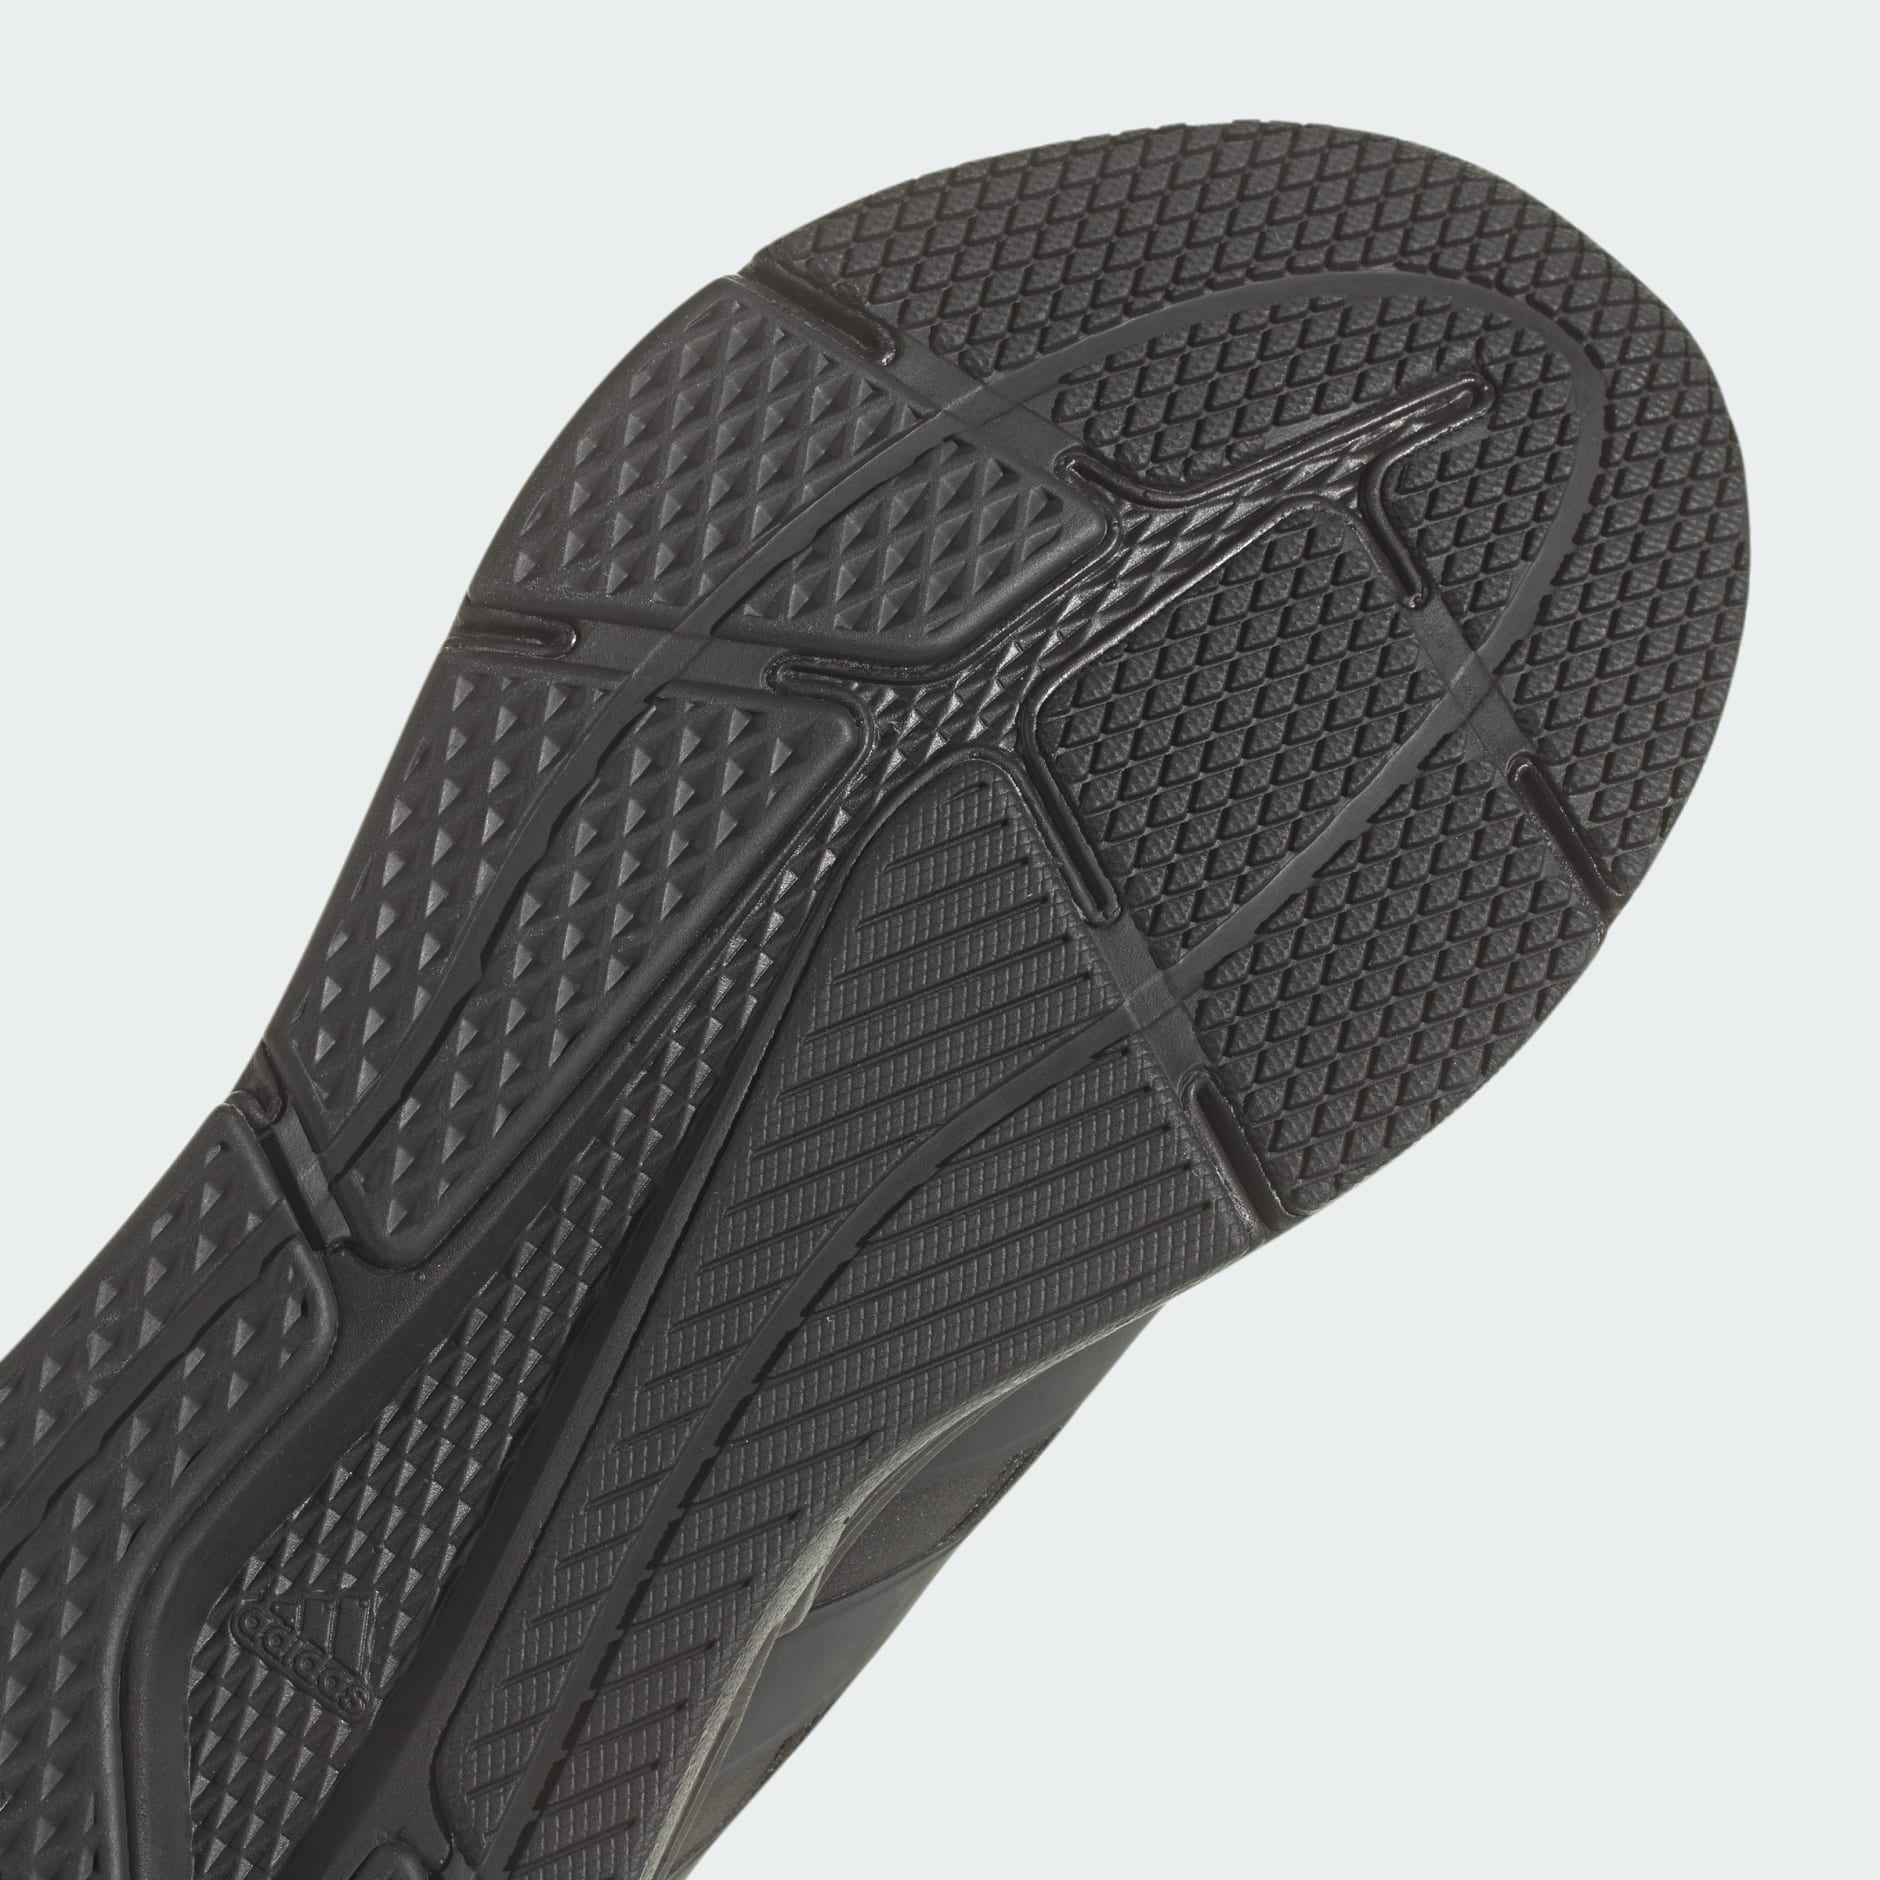 adidas Questar Shoes - Black | adidas LK